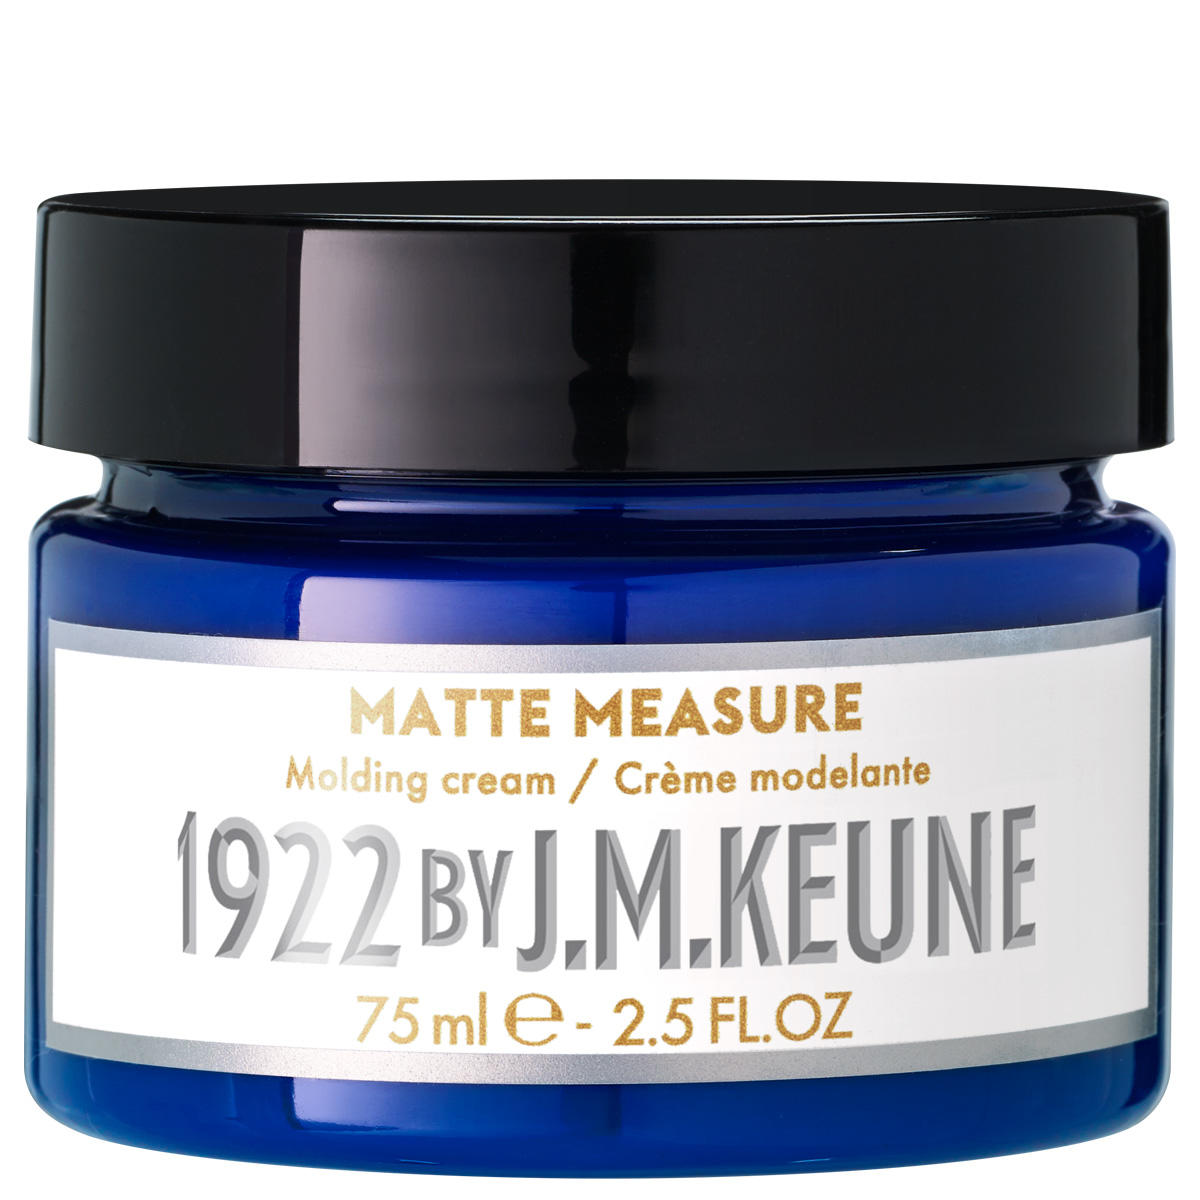 KEUNE 1922 Matte Measure Molding Cream mittlerer Halt 75 ml - 1